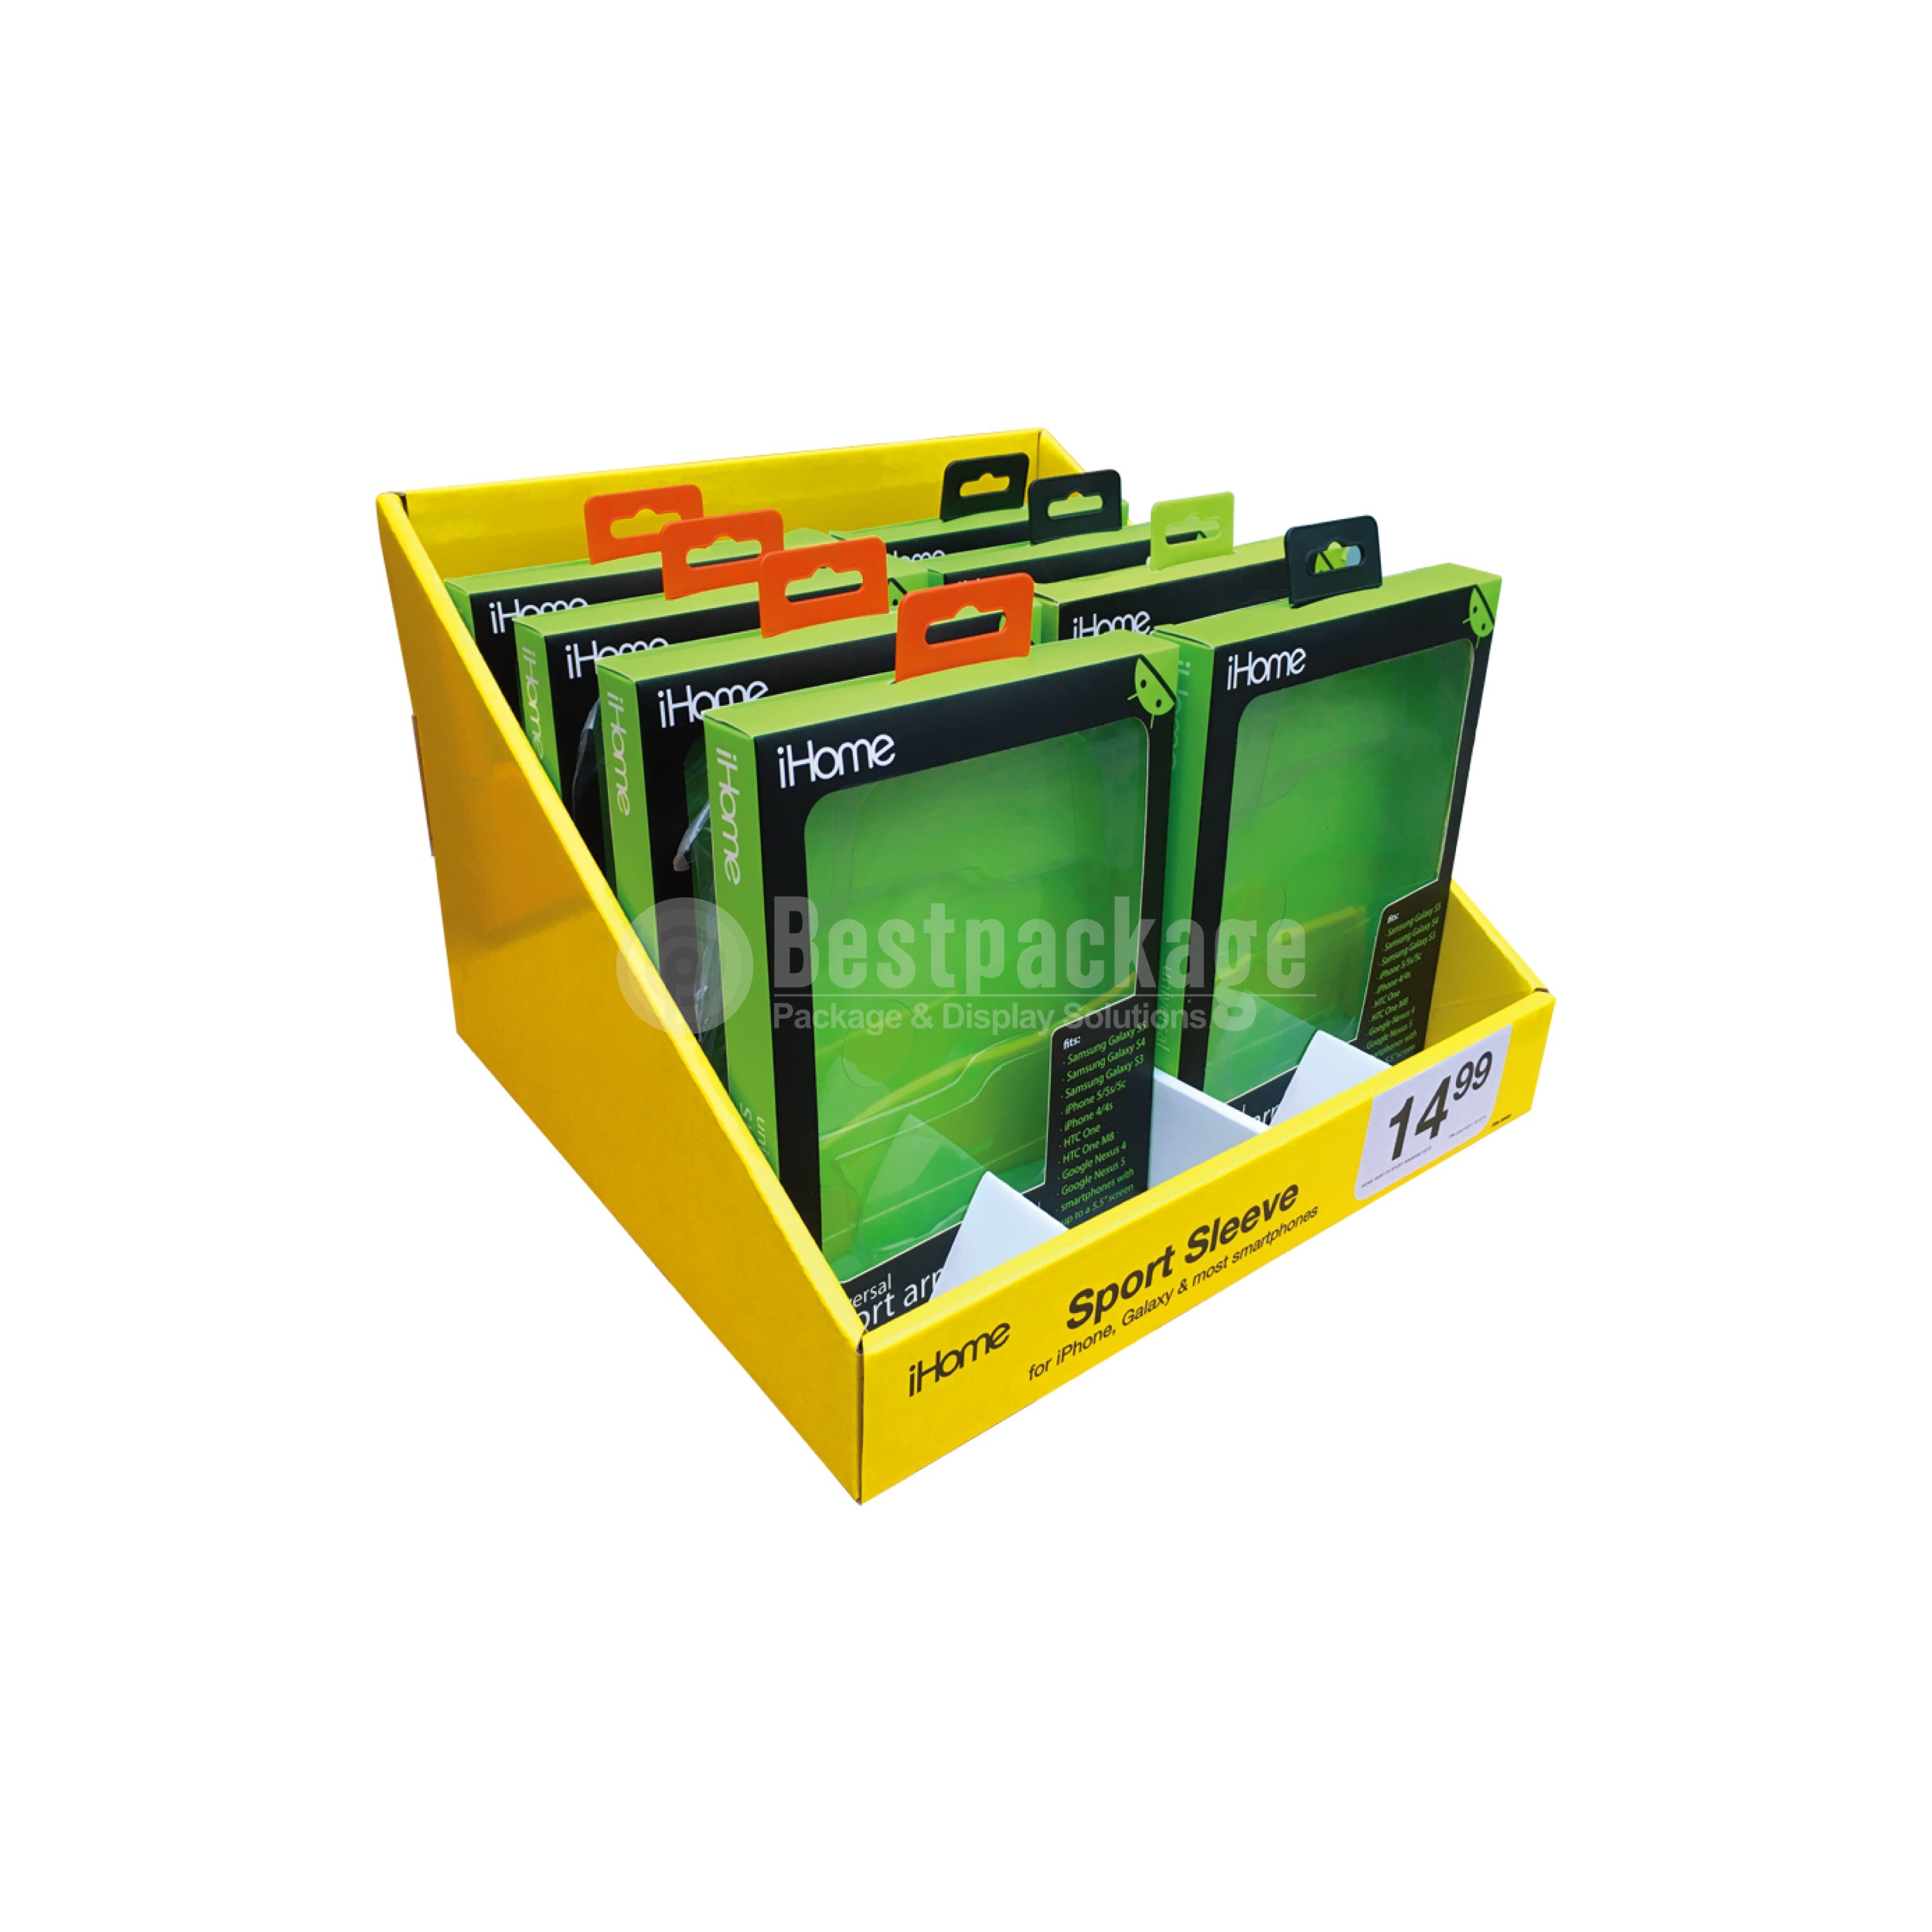 PDQ01026 Counter Cardboard Display, PDQ Cardboard Display, PDQ Display